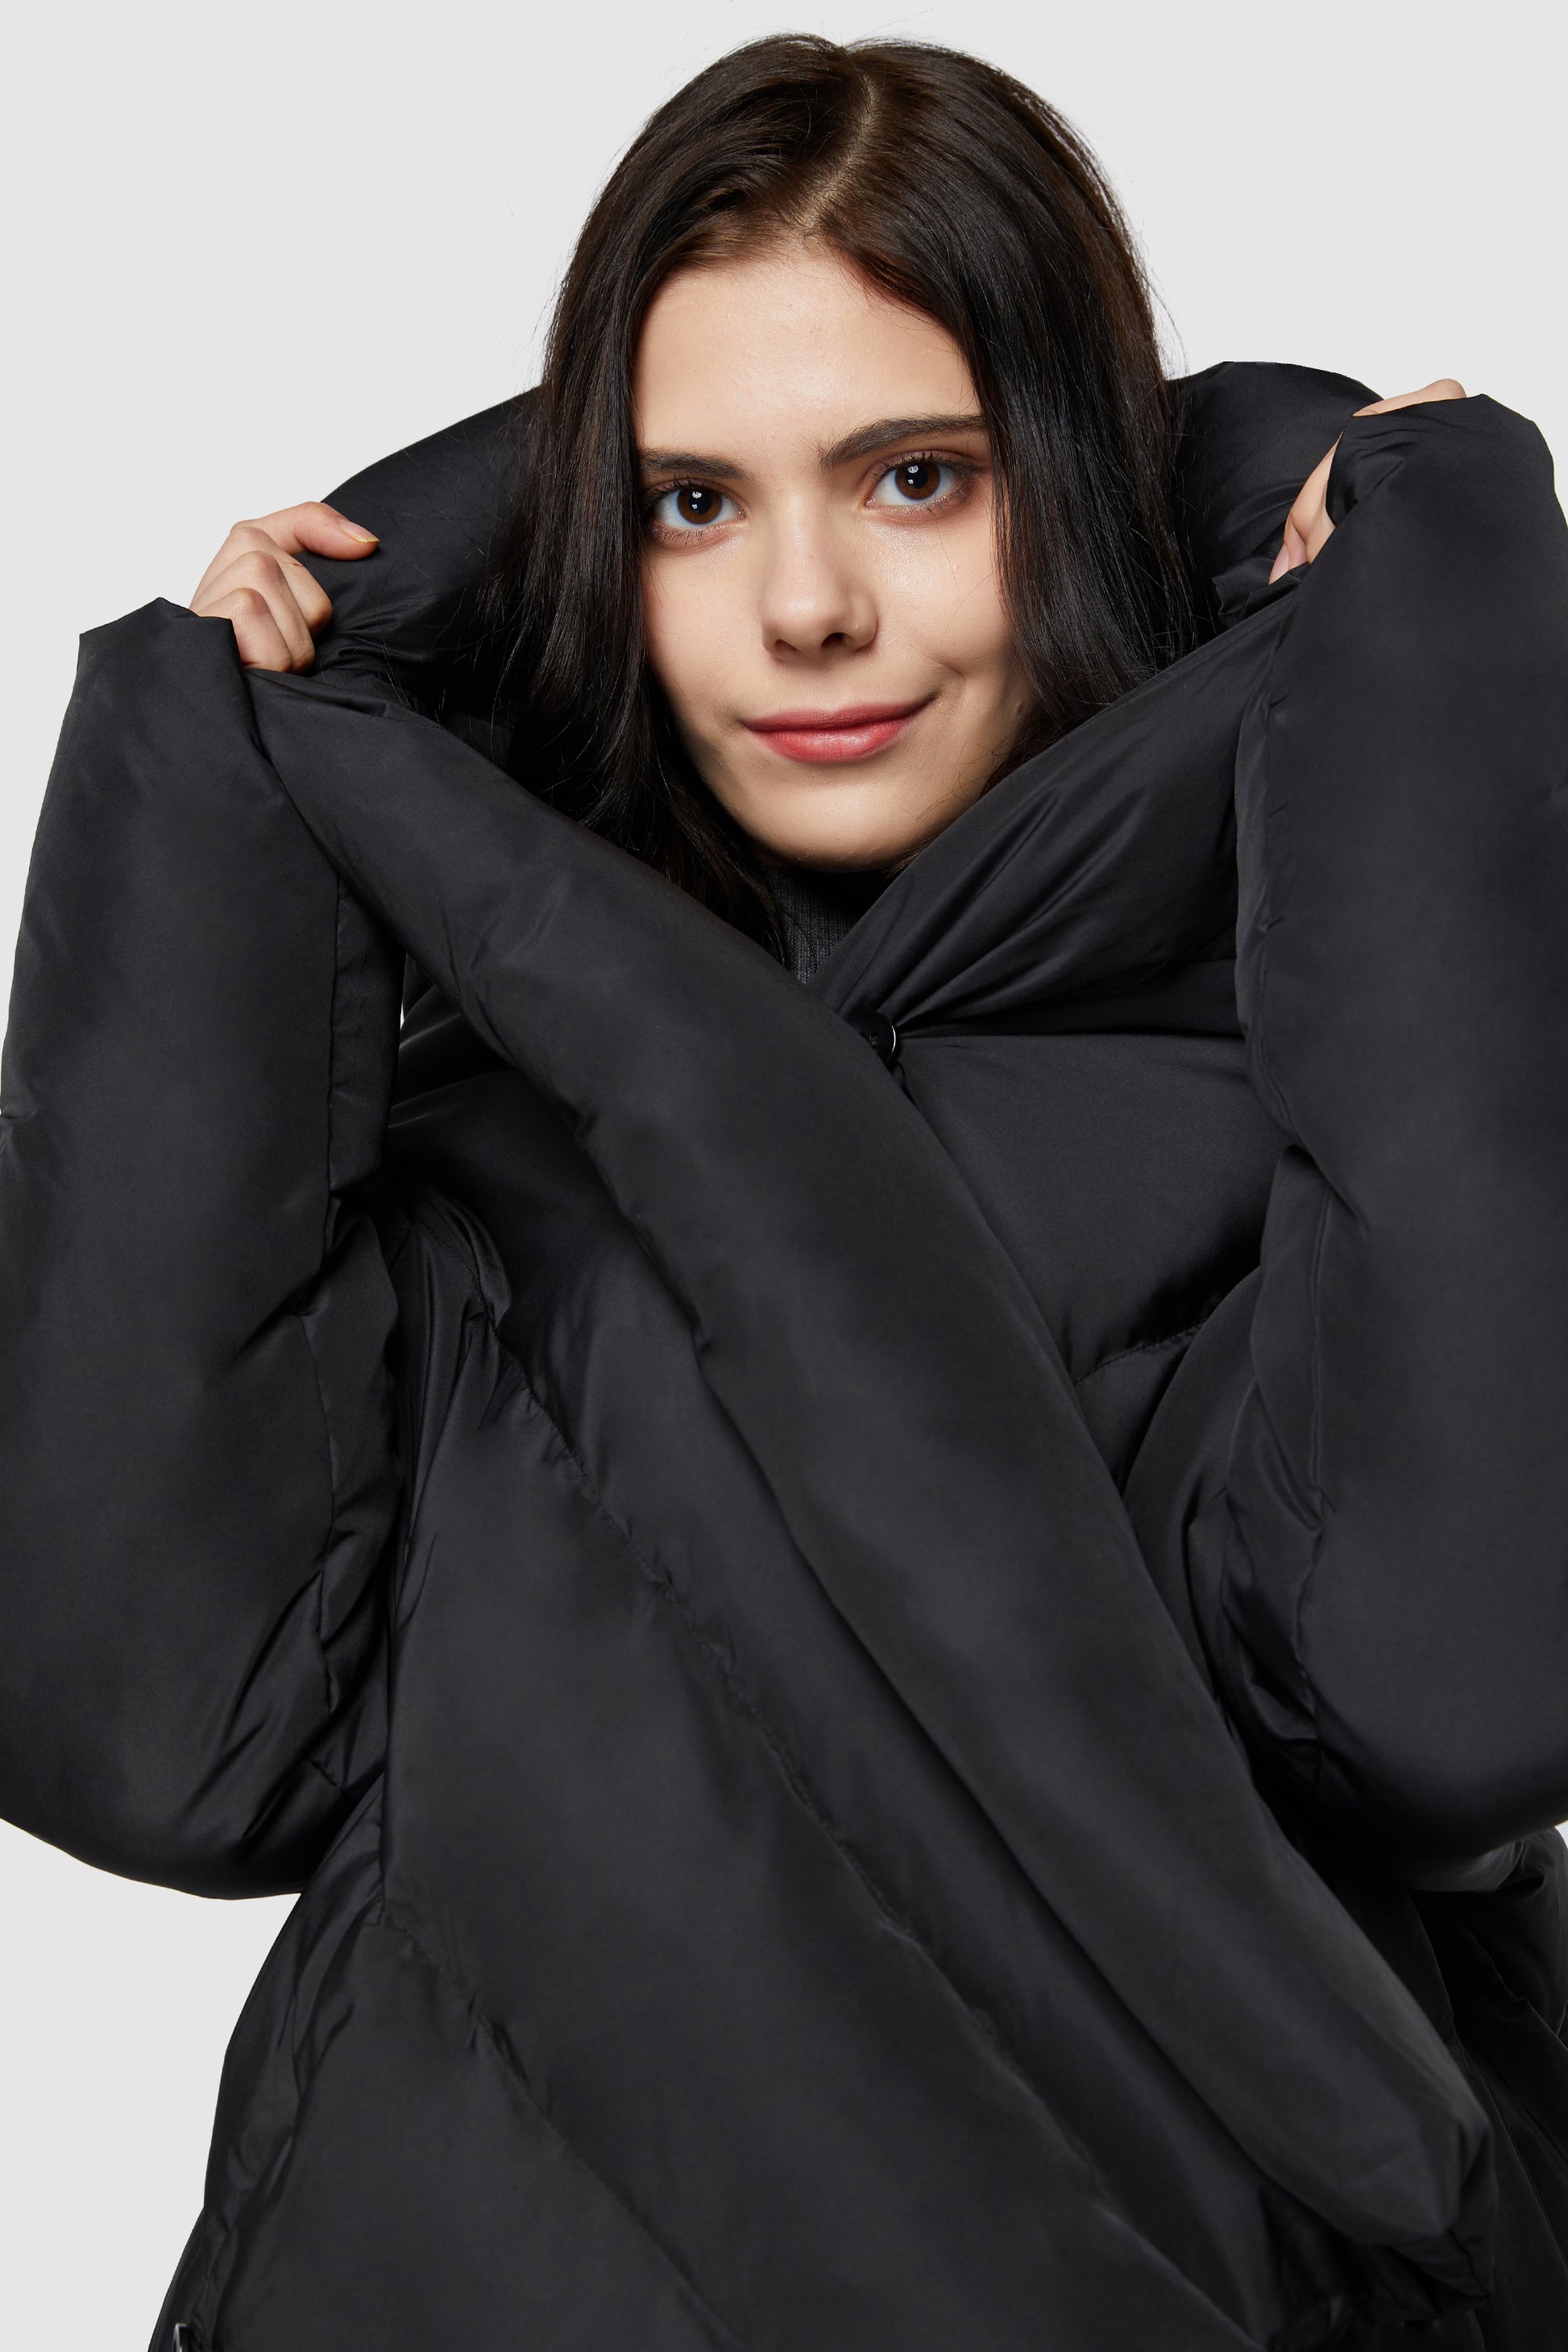 Women's Black Puffer Jackets & Down Coats